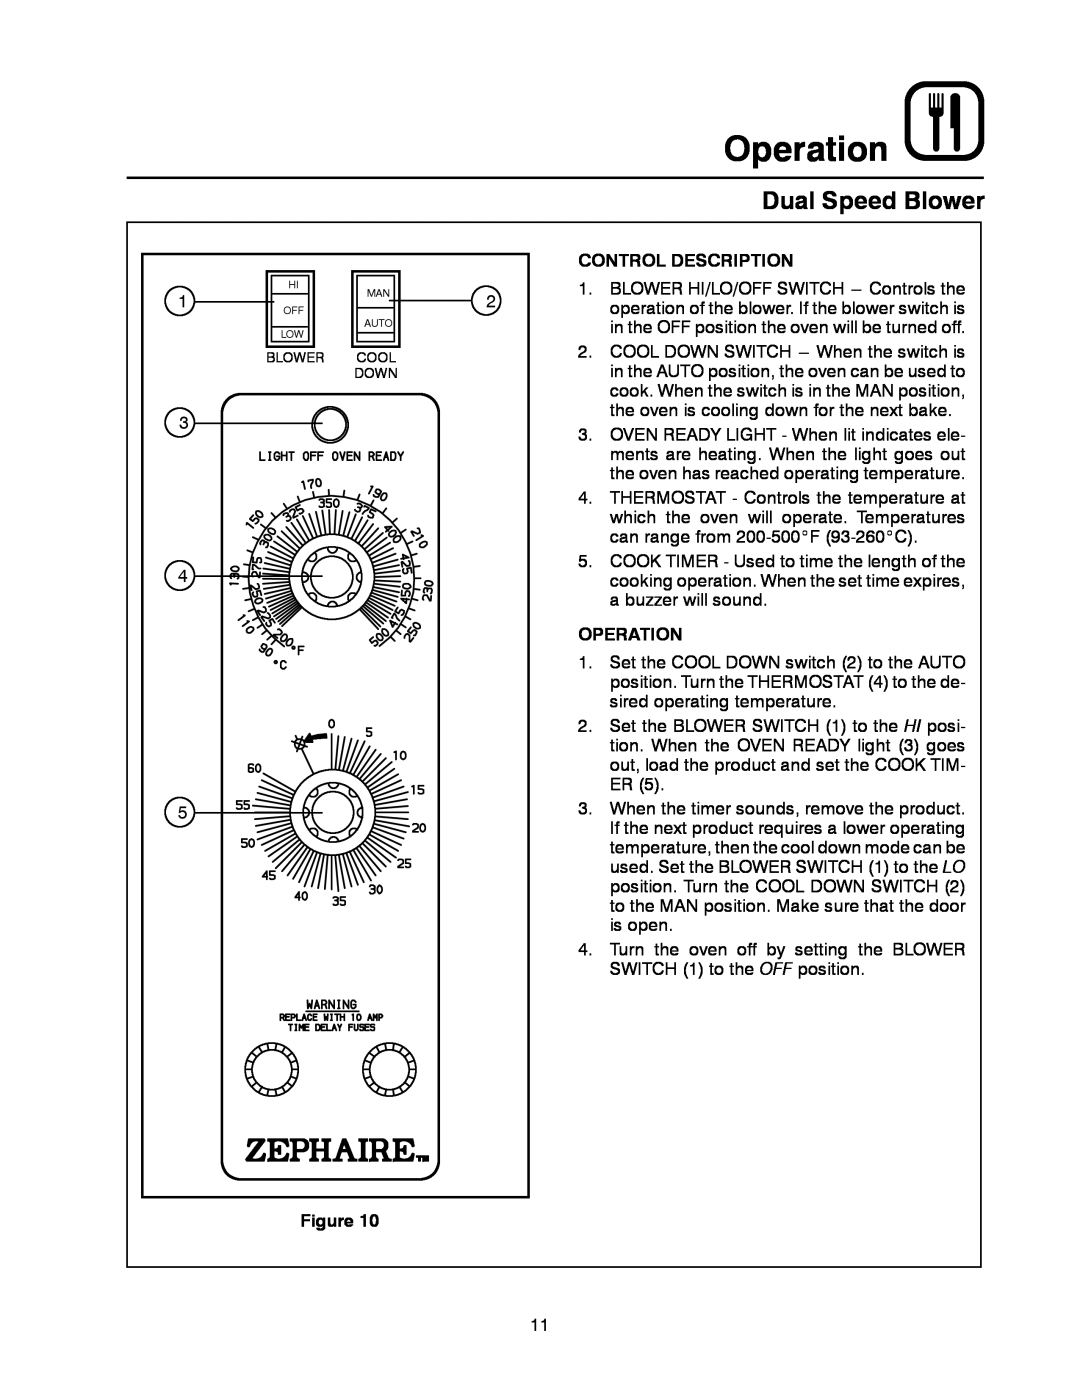 Blodgett ZEPHAIRE-E manual Operation, Dual Speed Blower, Control Description 